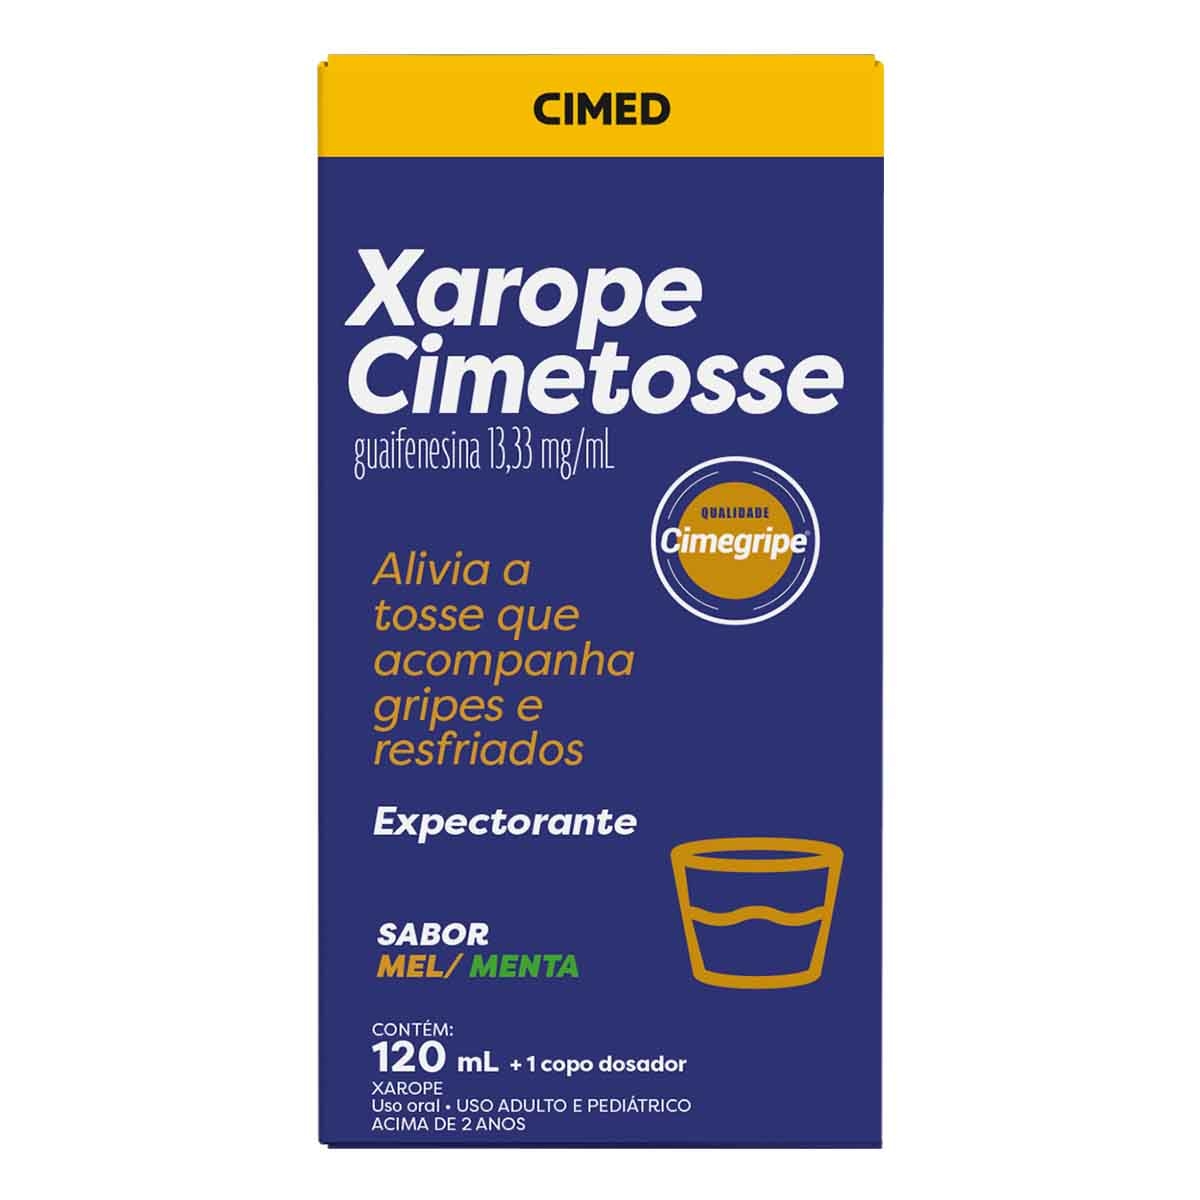 Compre Guaifenesina Xarope 13,3mg/ml 120ml (Neo Quimica) Genérico  Transpulmin